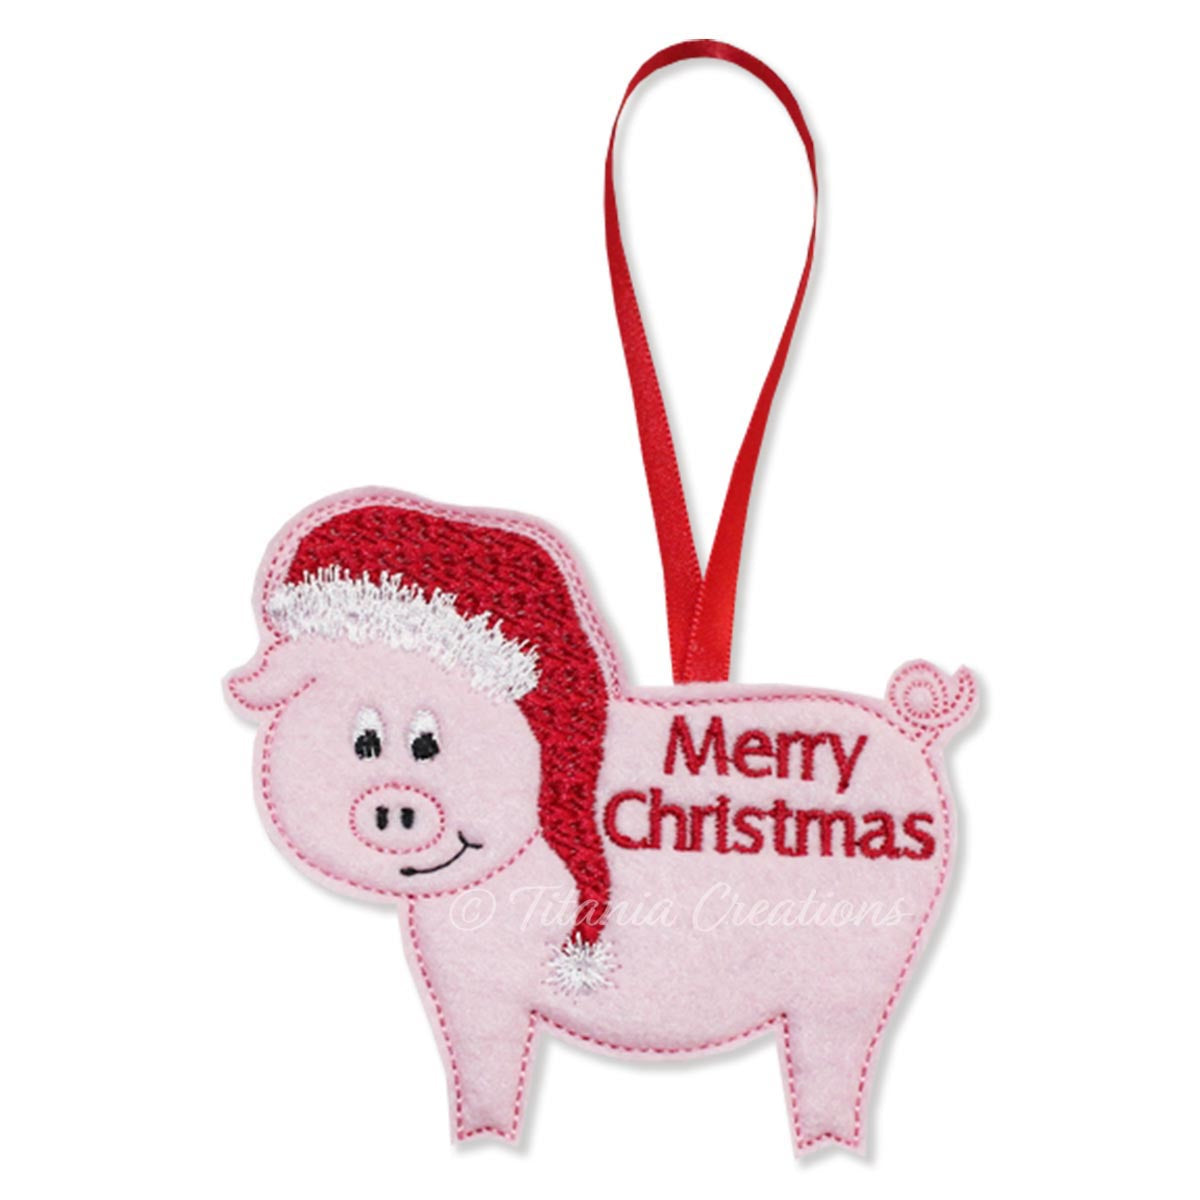 ITH Merry Christmas Pig 4x4